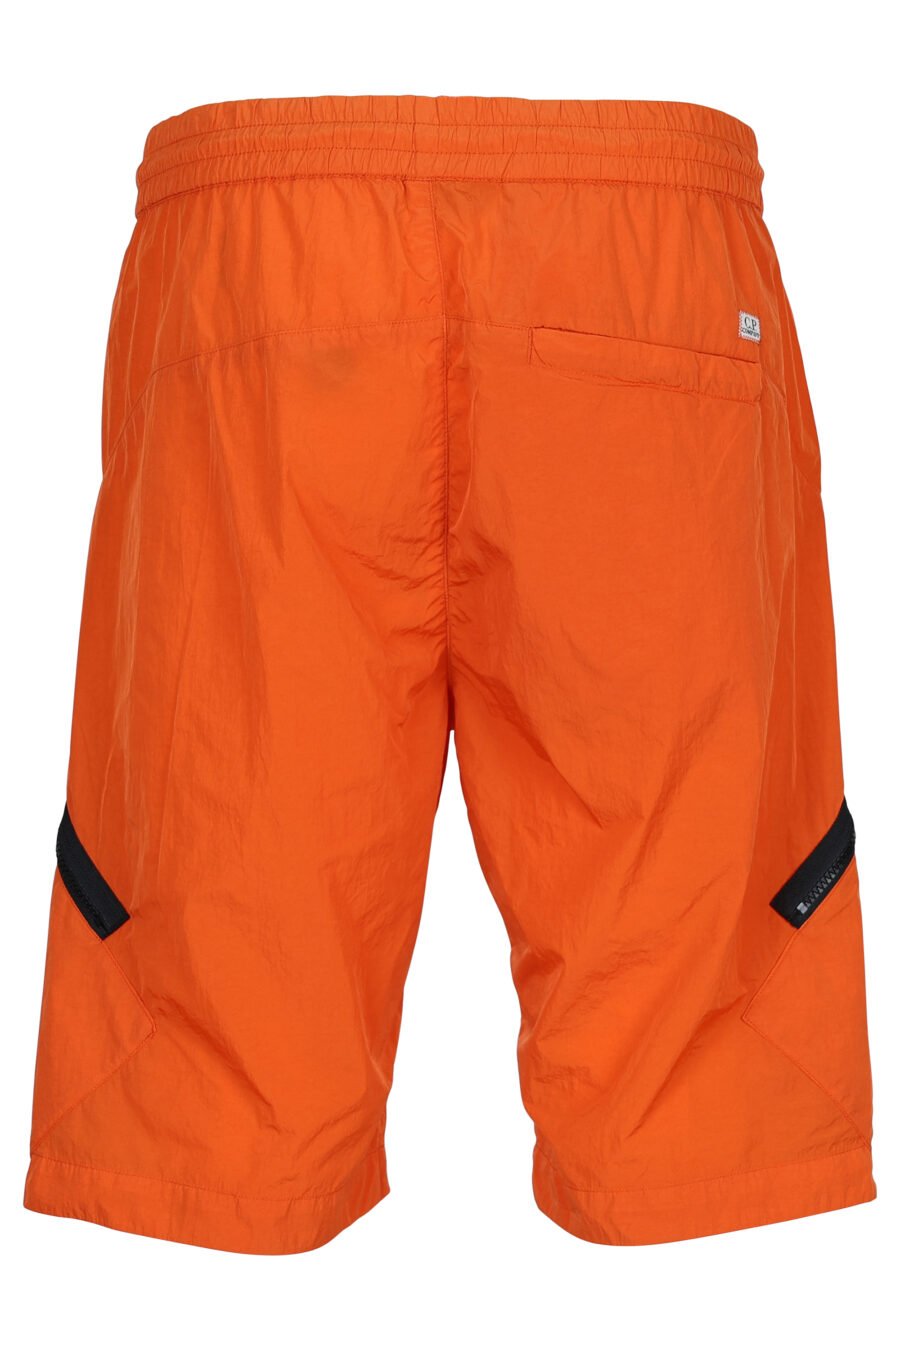 Pantalón corto naranja con cremallera diagonal y logo lente - 7620943518290 2